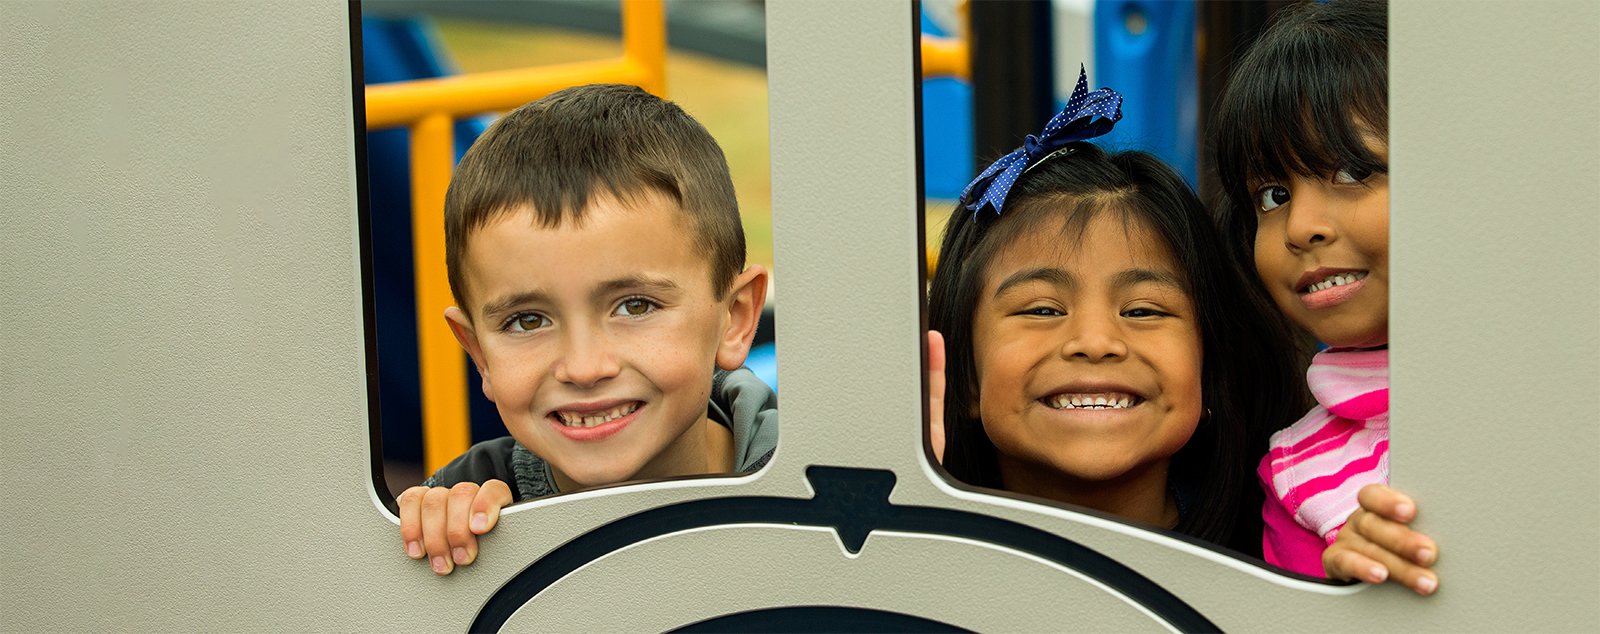 kids smiling on playground